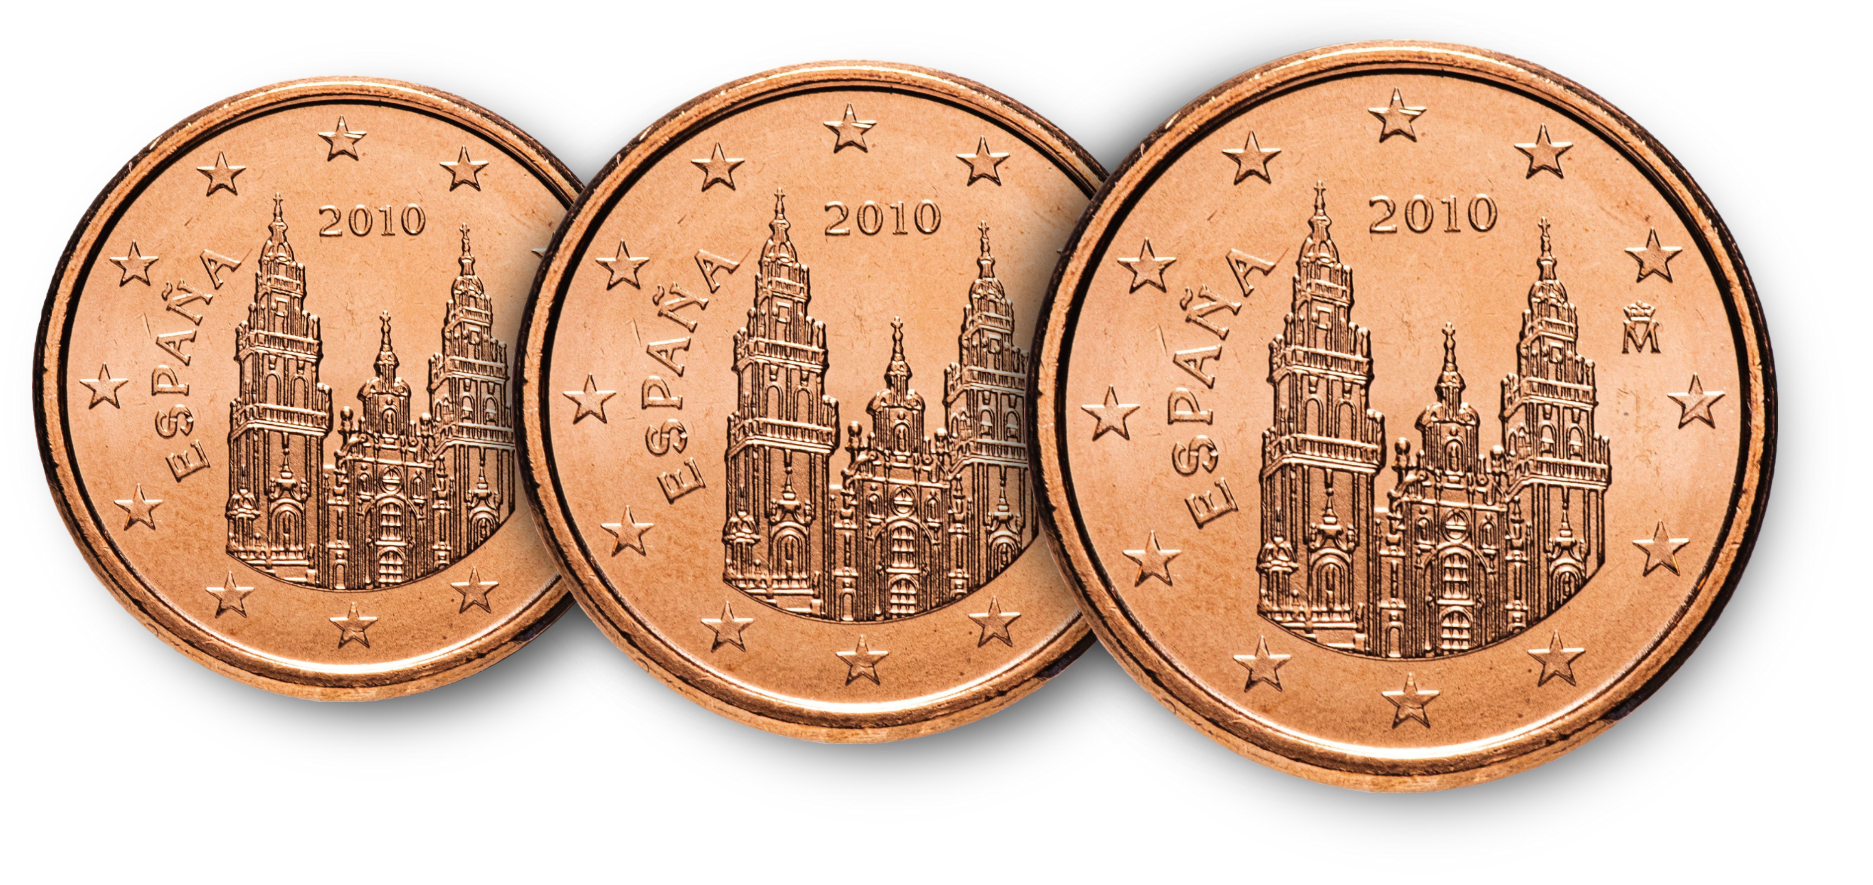 Filatis2 online shop - Euro coins info